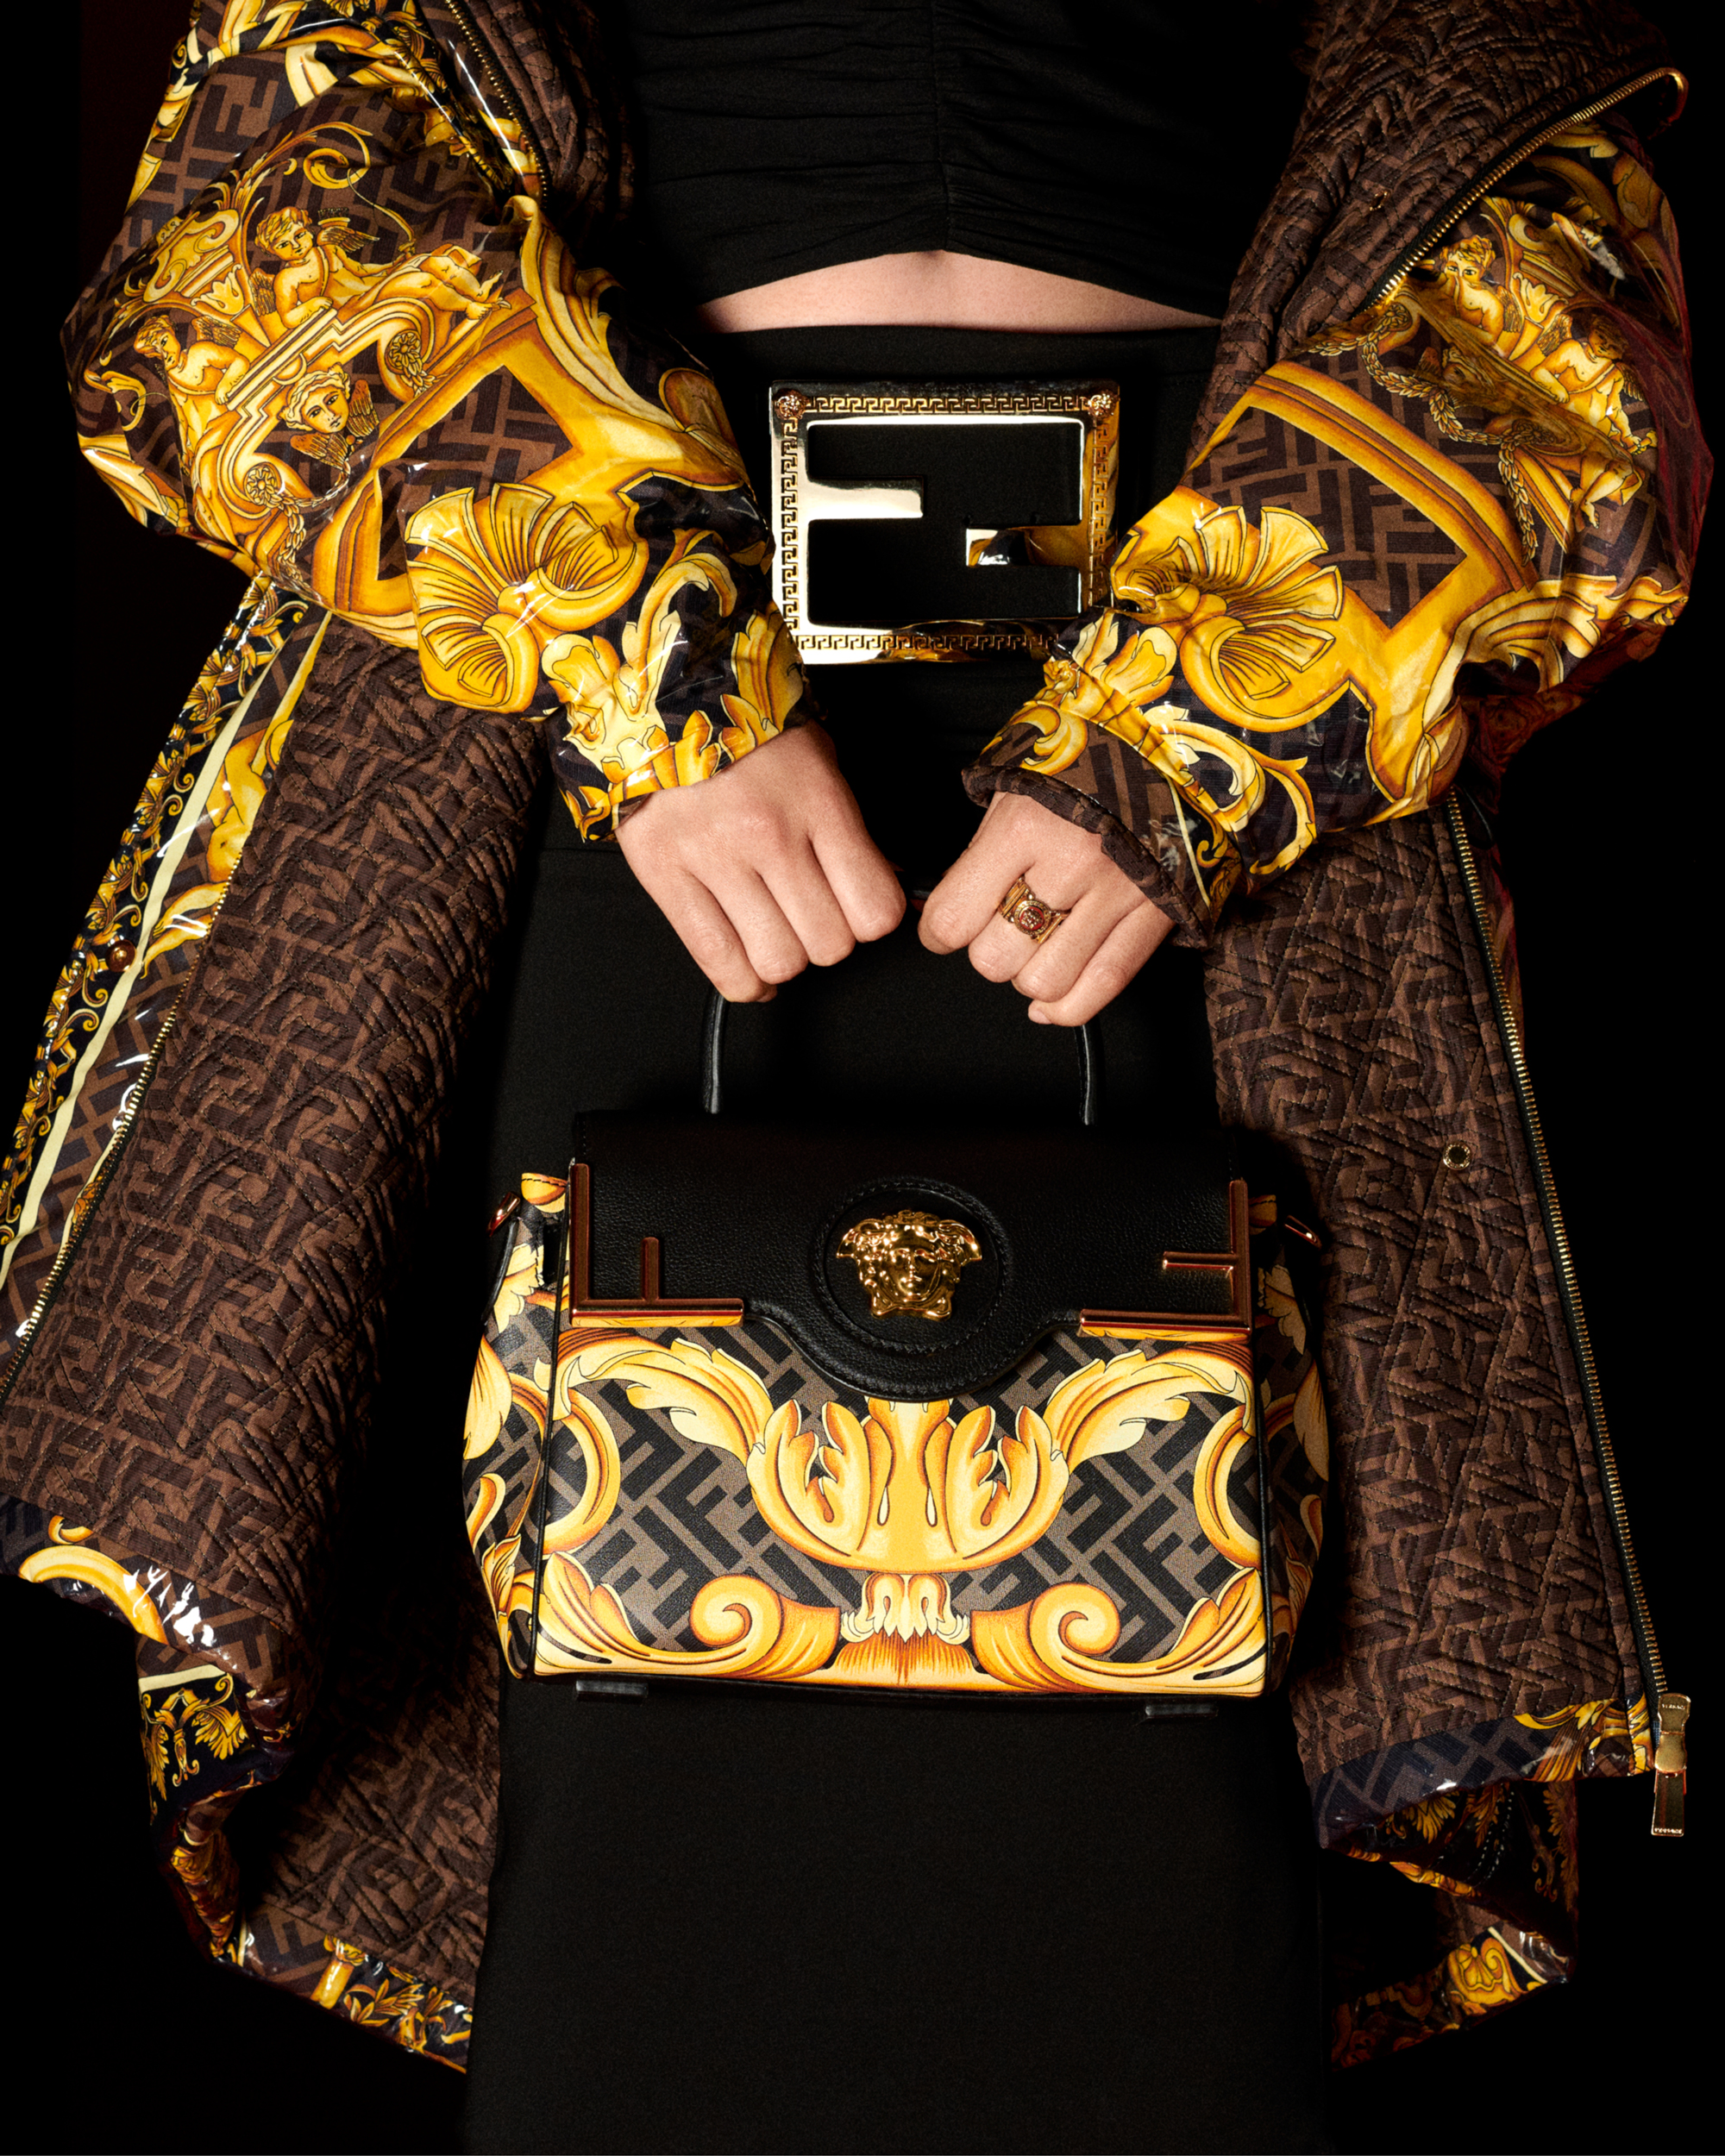 Fendace Fendi X Versace Collaboration La Medusa Turquoise Black Gold Bag